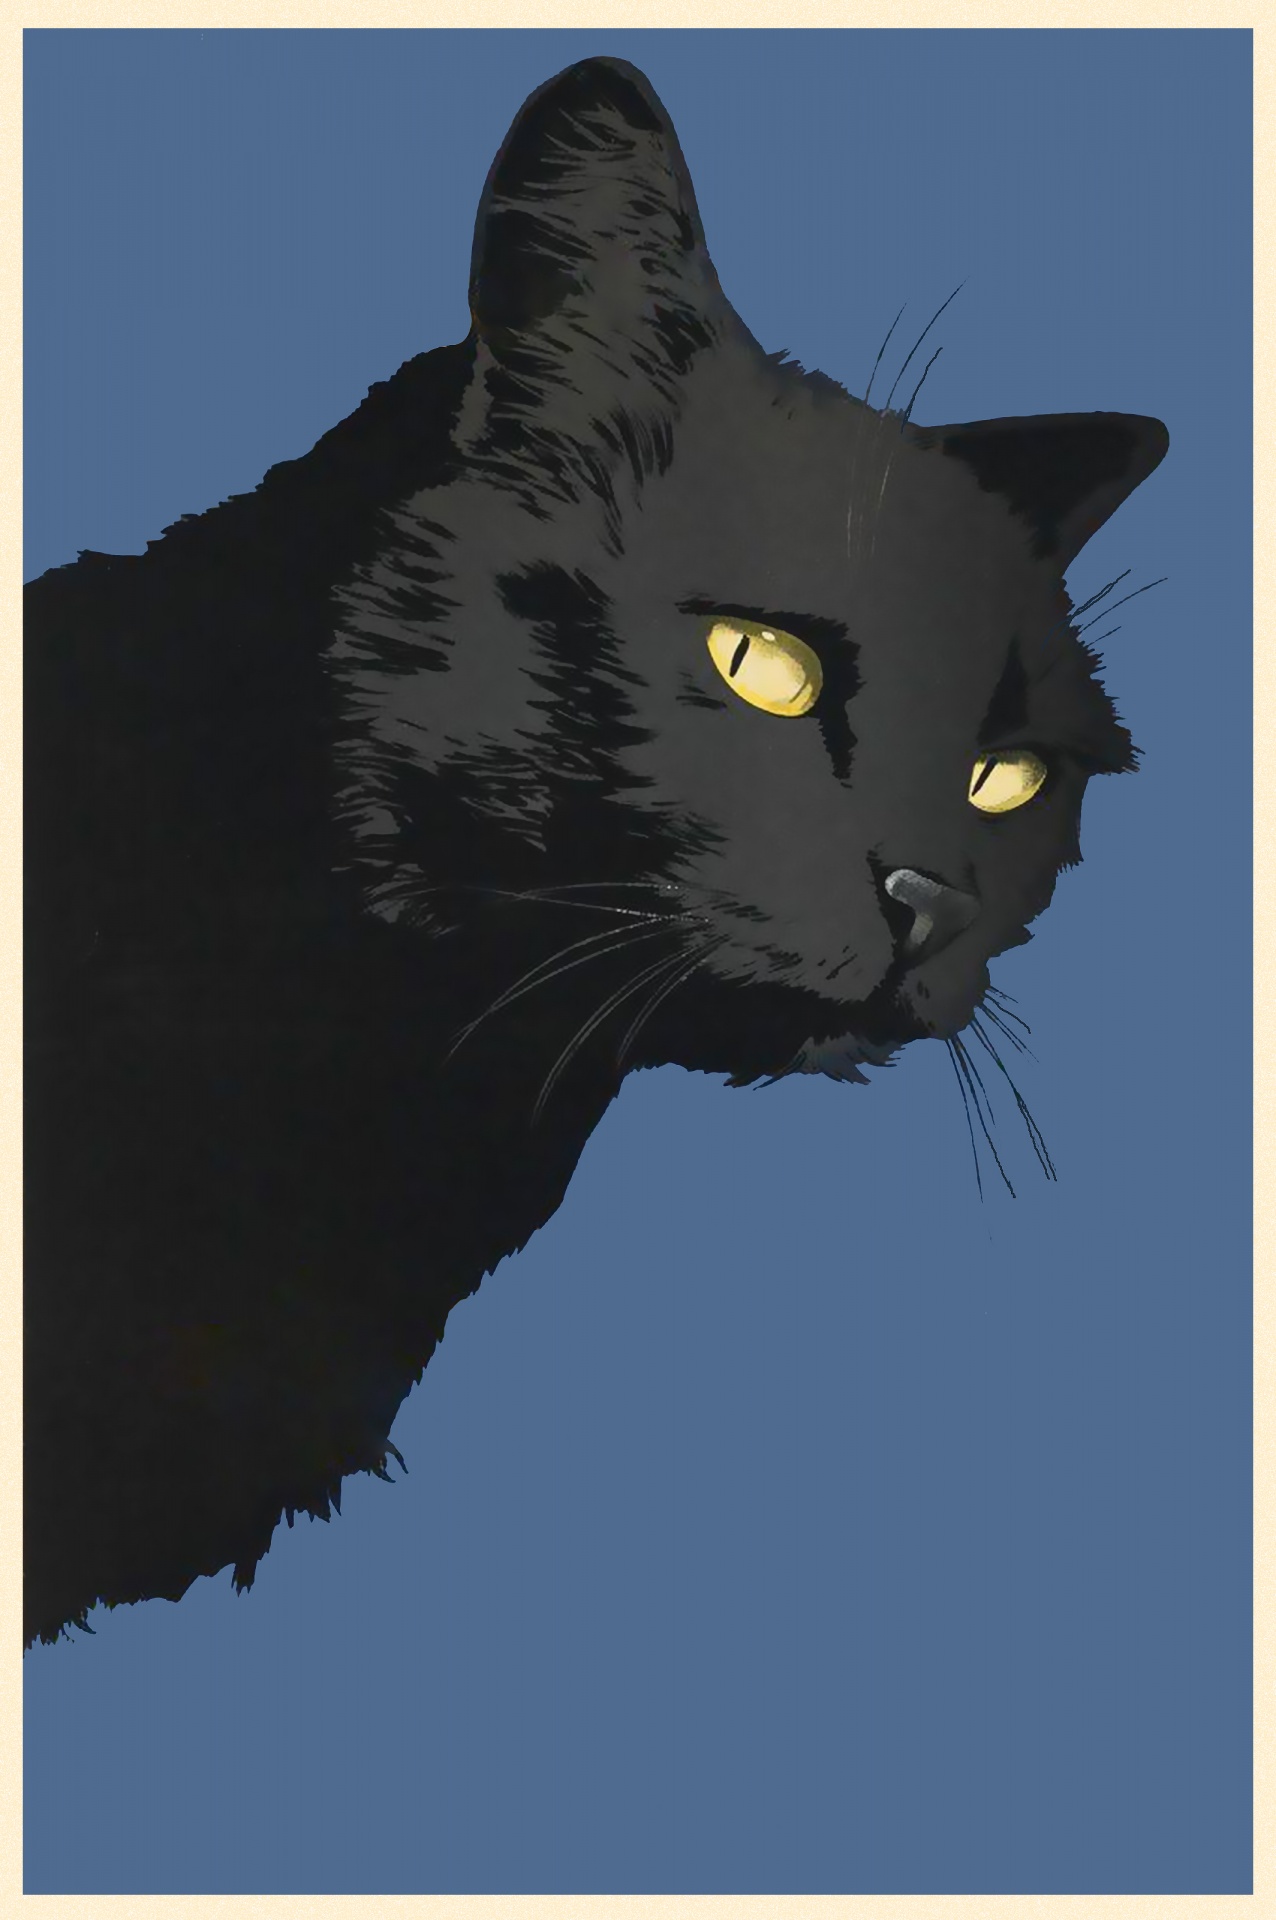 Cartel vintage gato negro